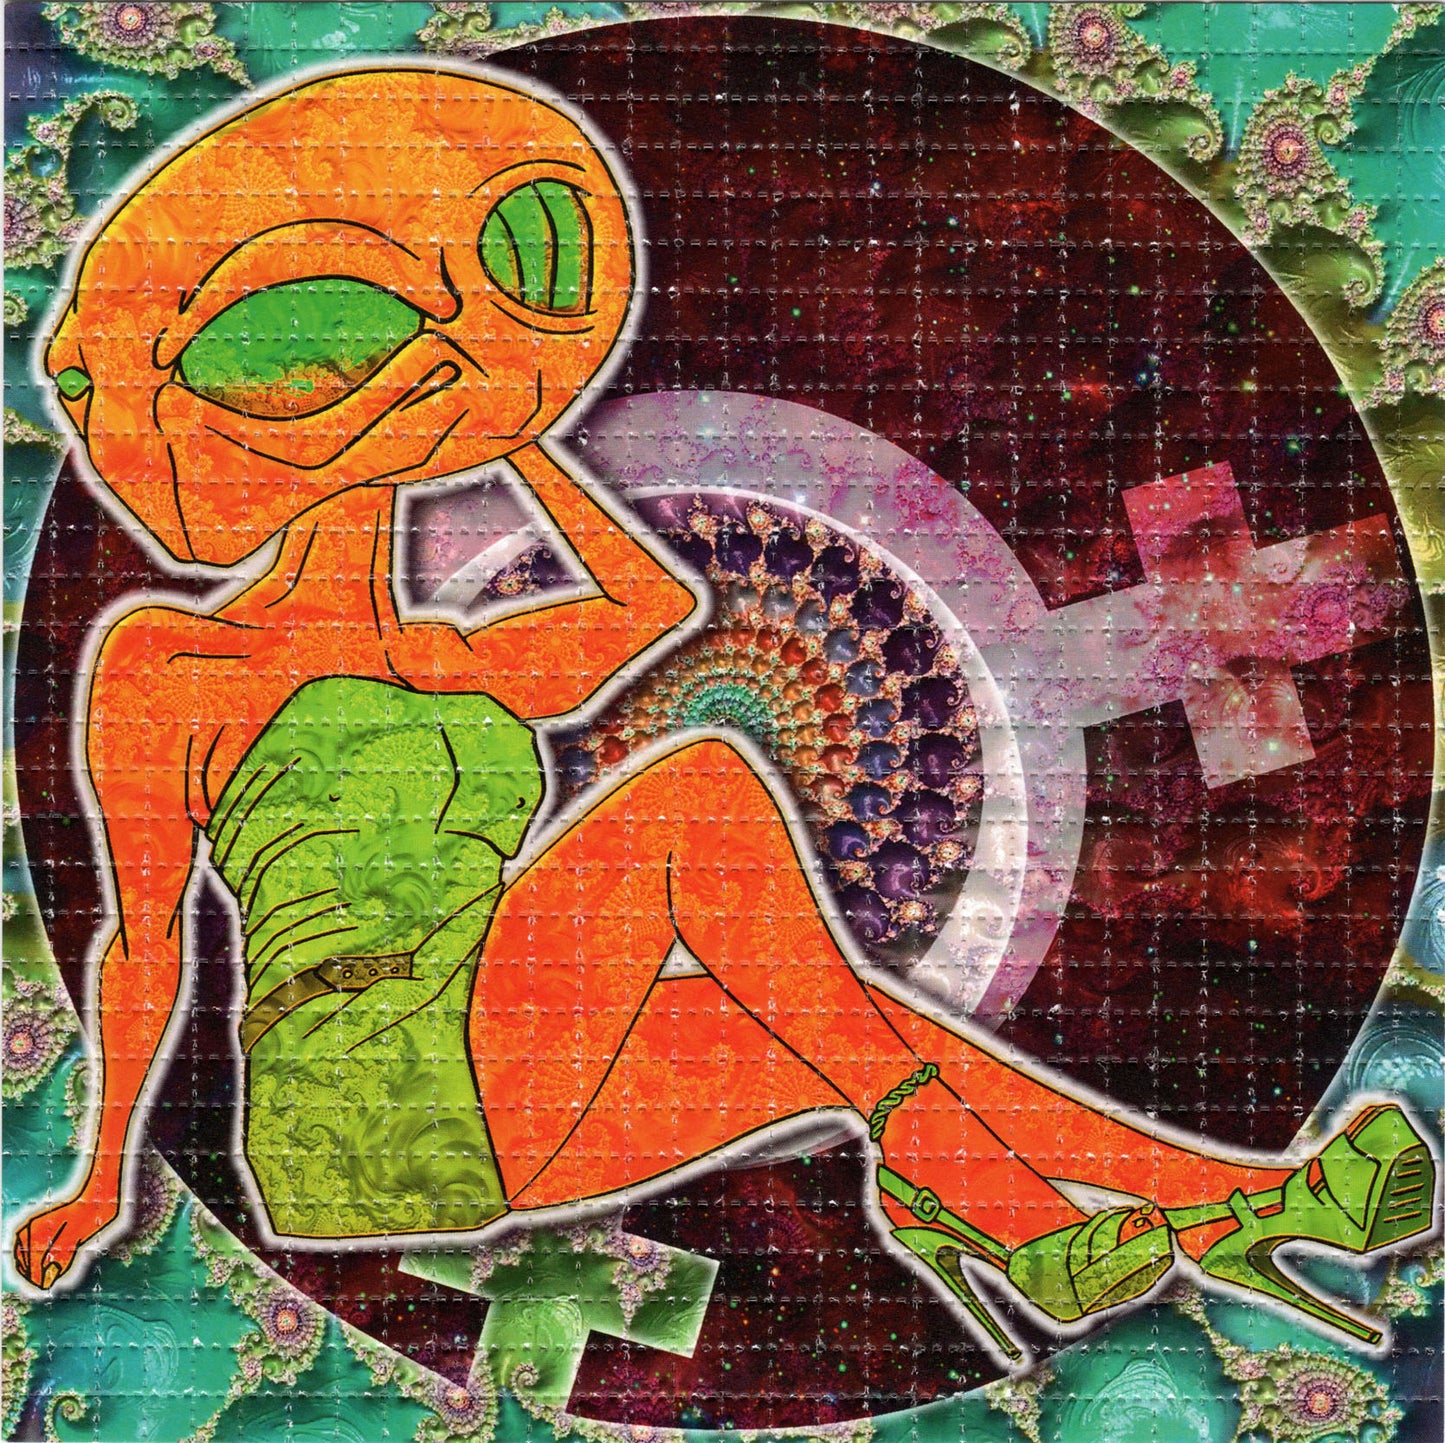 Sexy Orange Alien by Vini Kiniki SIGNED Limited Edition LSD blotter art print